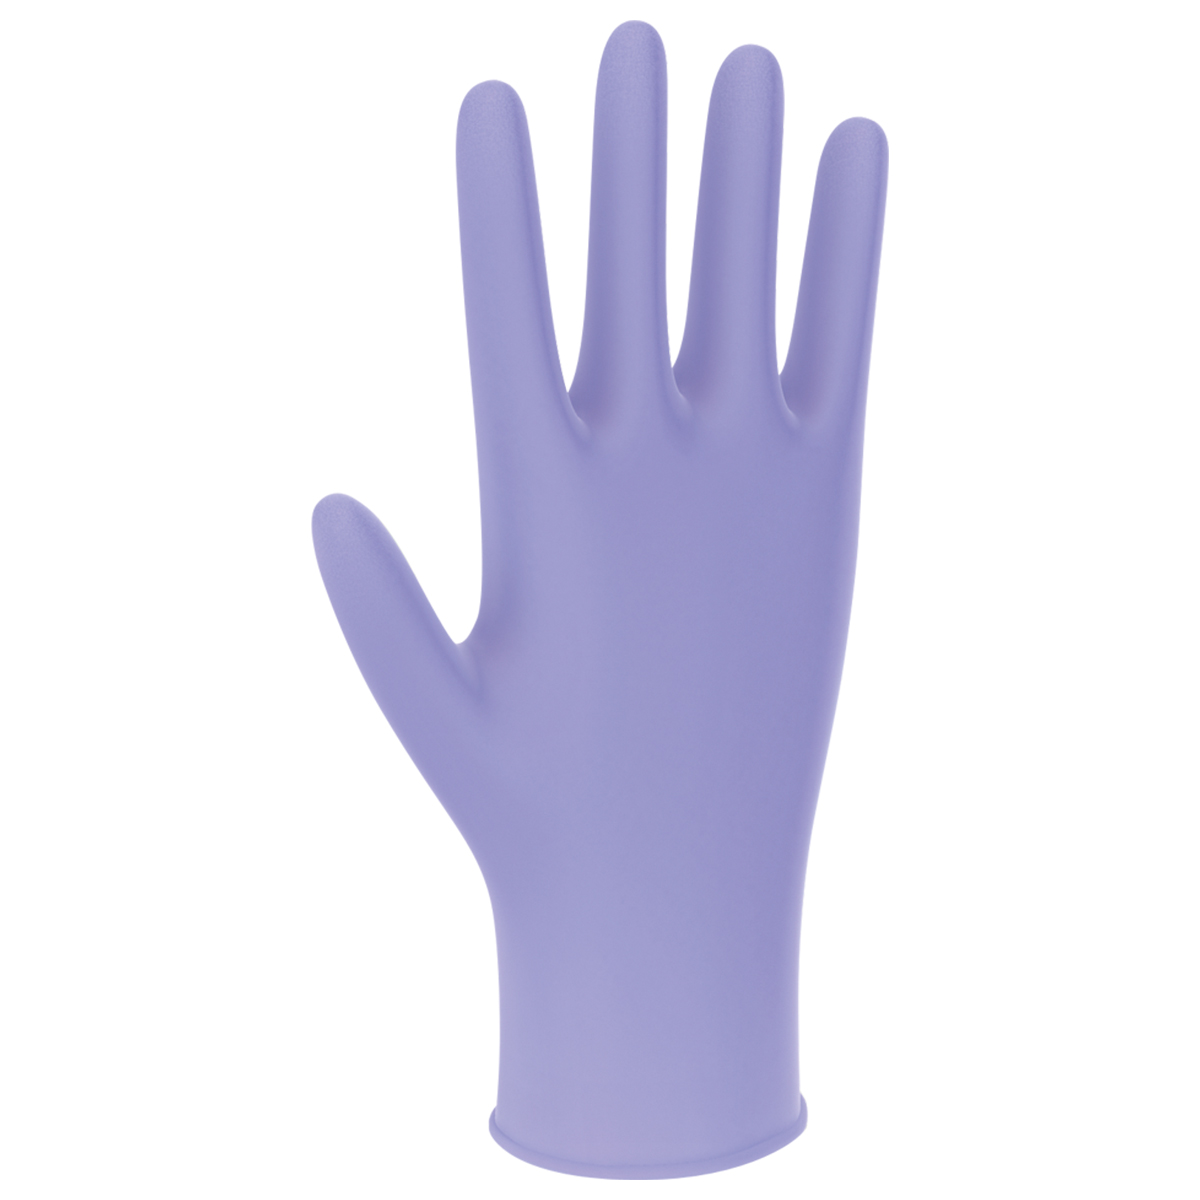 Einmal-Handschuhe, Nitril, Gr. L / 8 - 9, violett, latexfrei, puderfrei, unsteril, 100 Stk